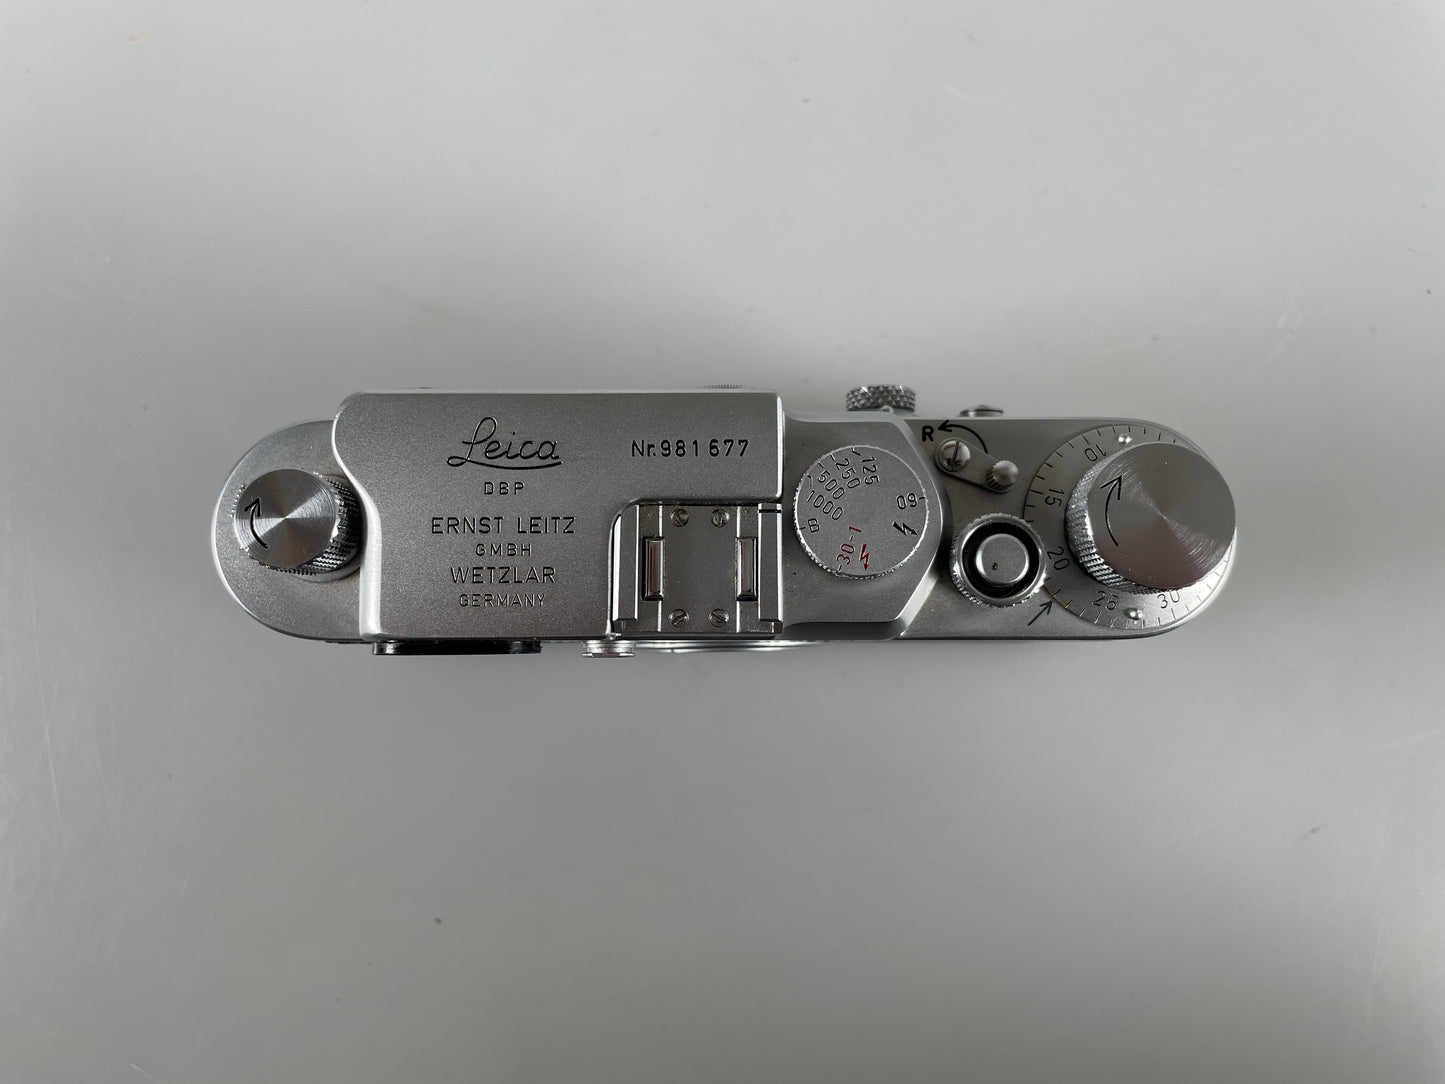 Leica IIIG Screwmount LTM Rangefinder Body in Chrome Silver